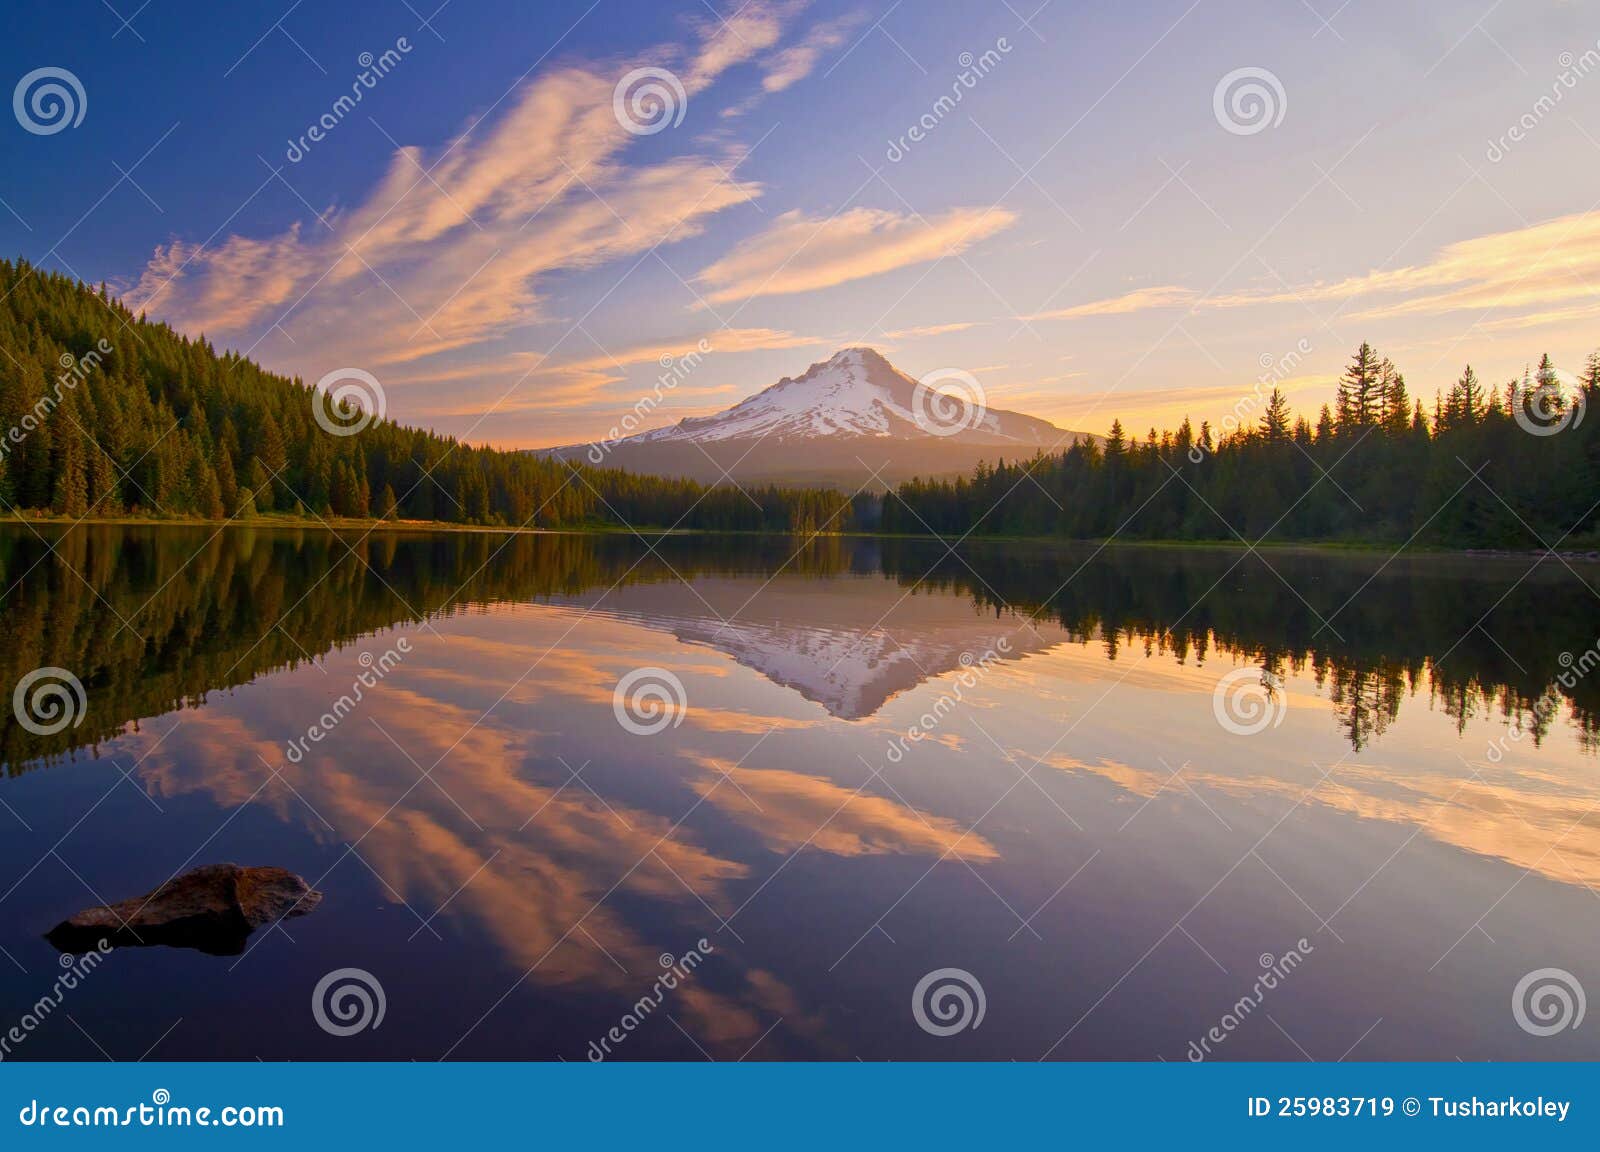 beautiful sunrise in trillium lake